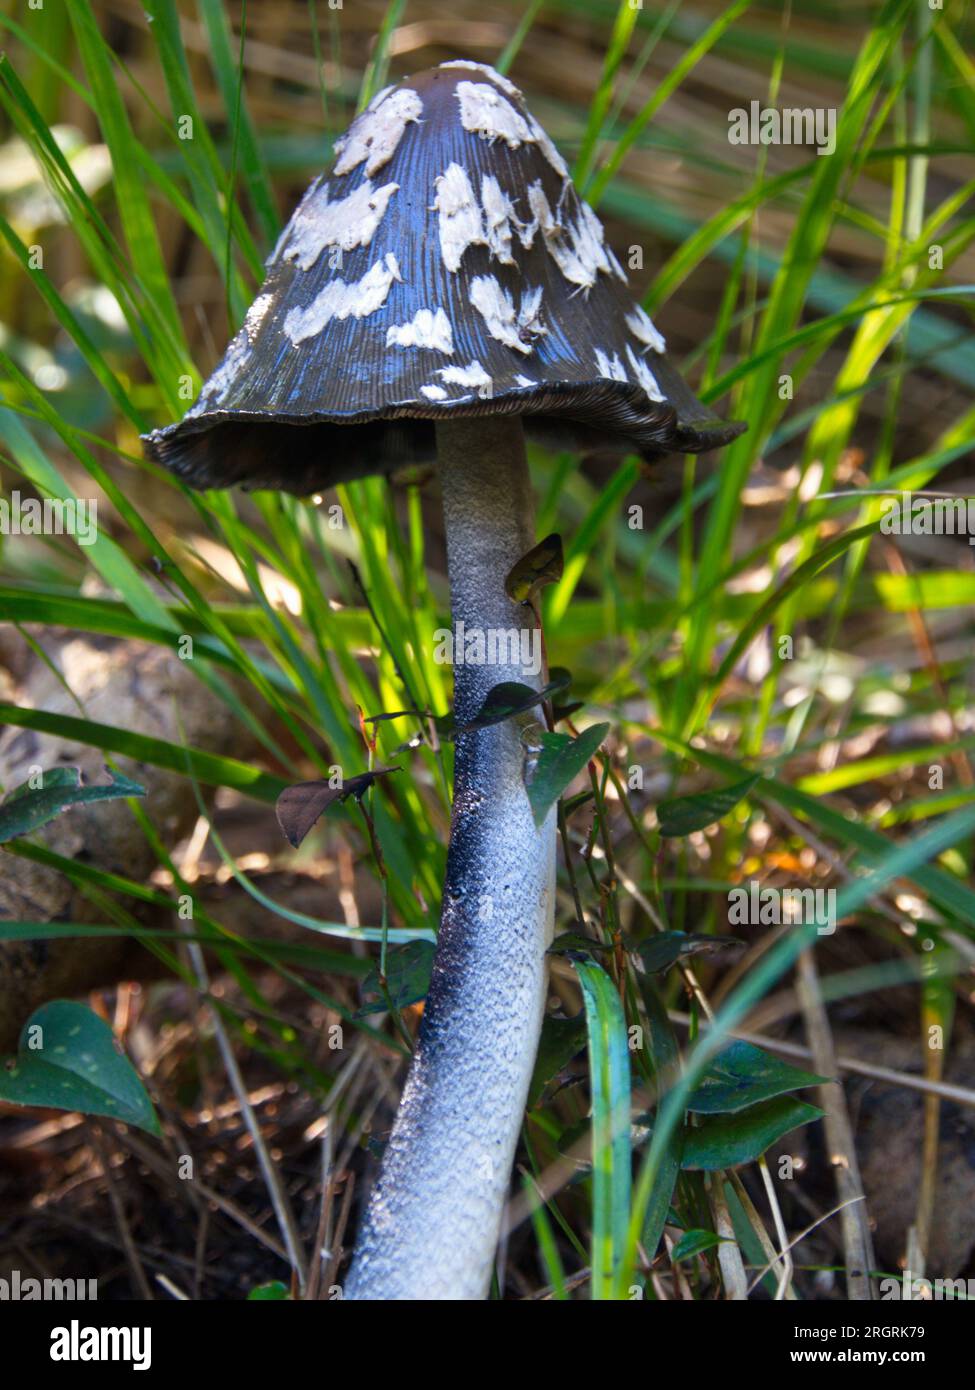 Coprinopsis picacea mushroom. Seta de Coprinopsis picacea, Stock Photo